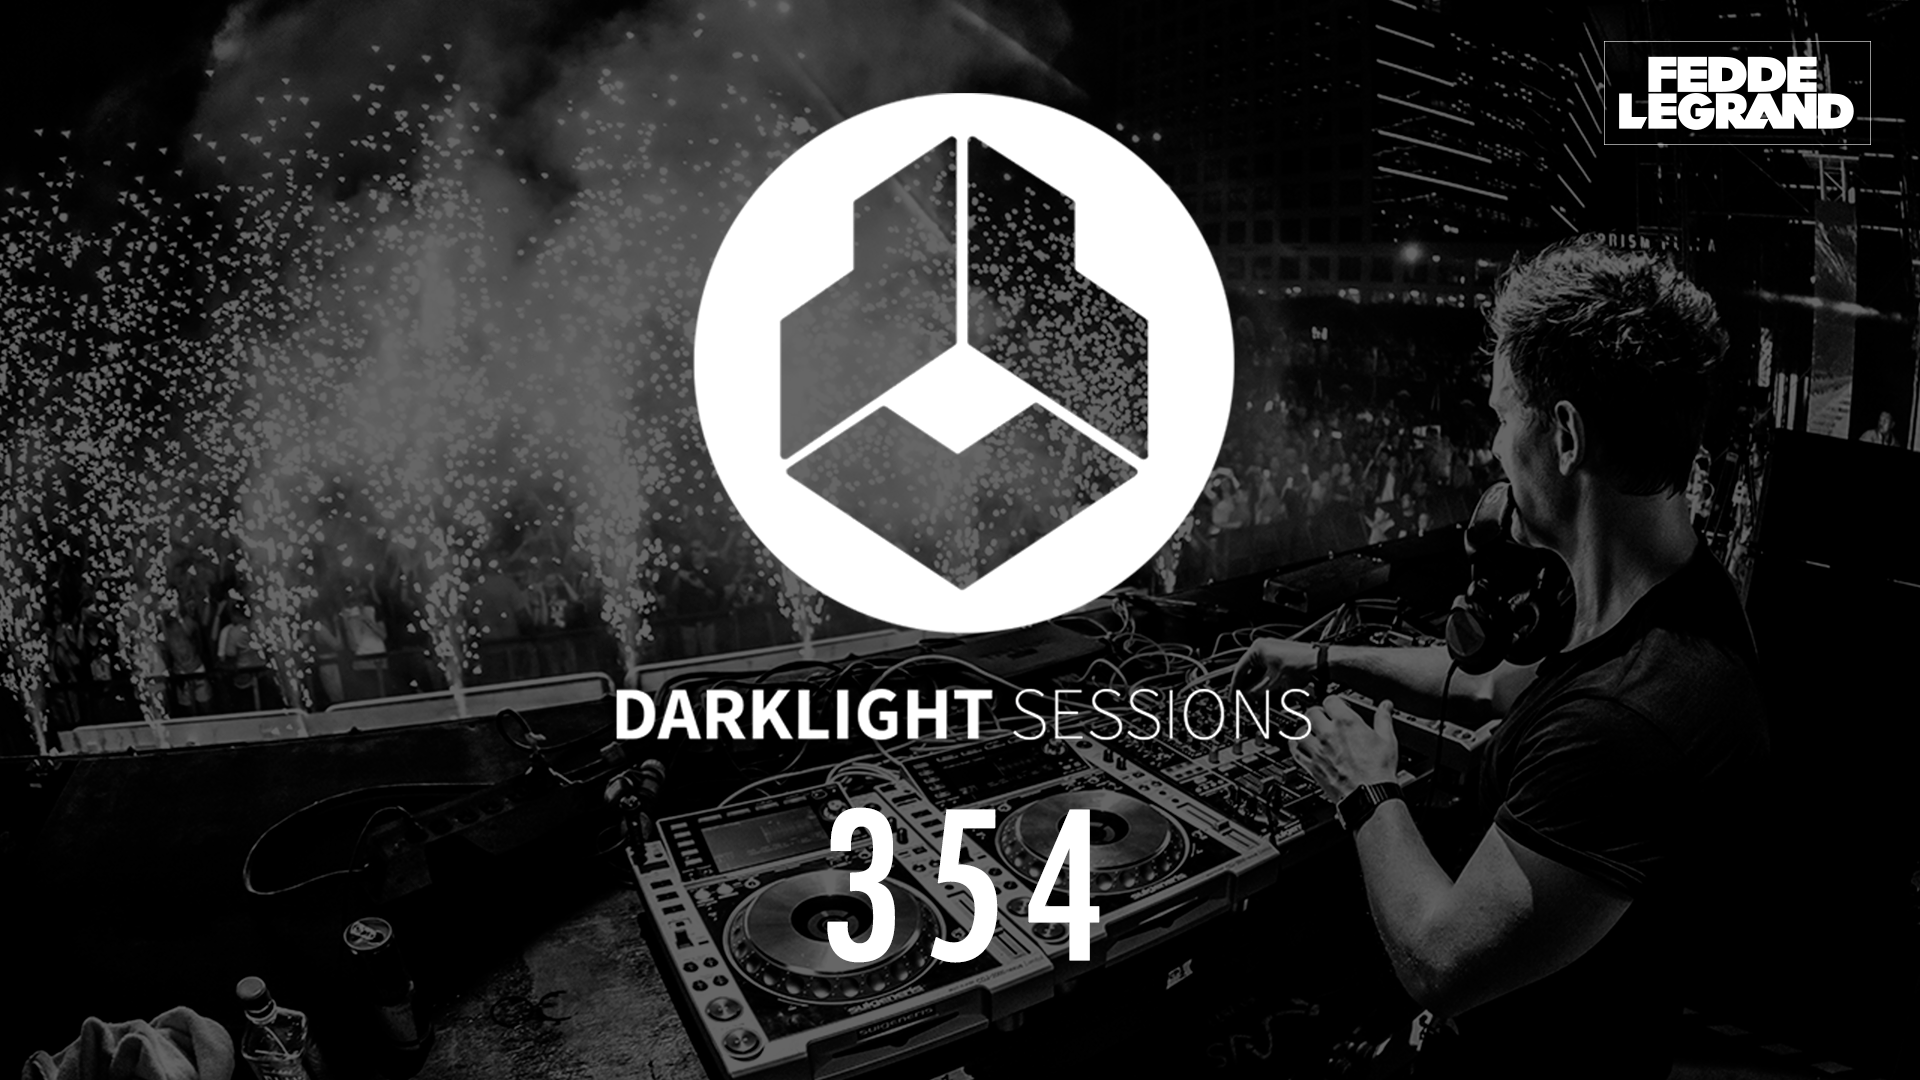 Darklight Sessions 354